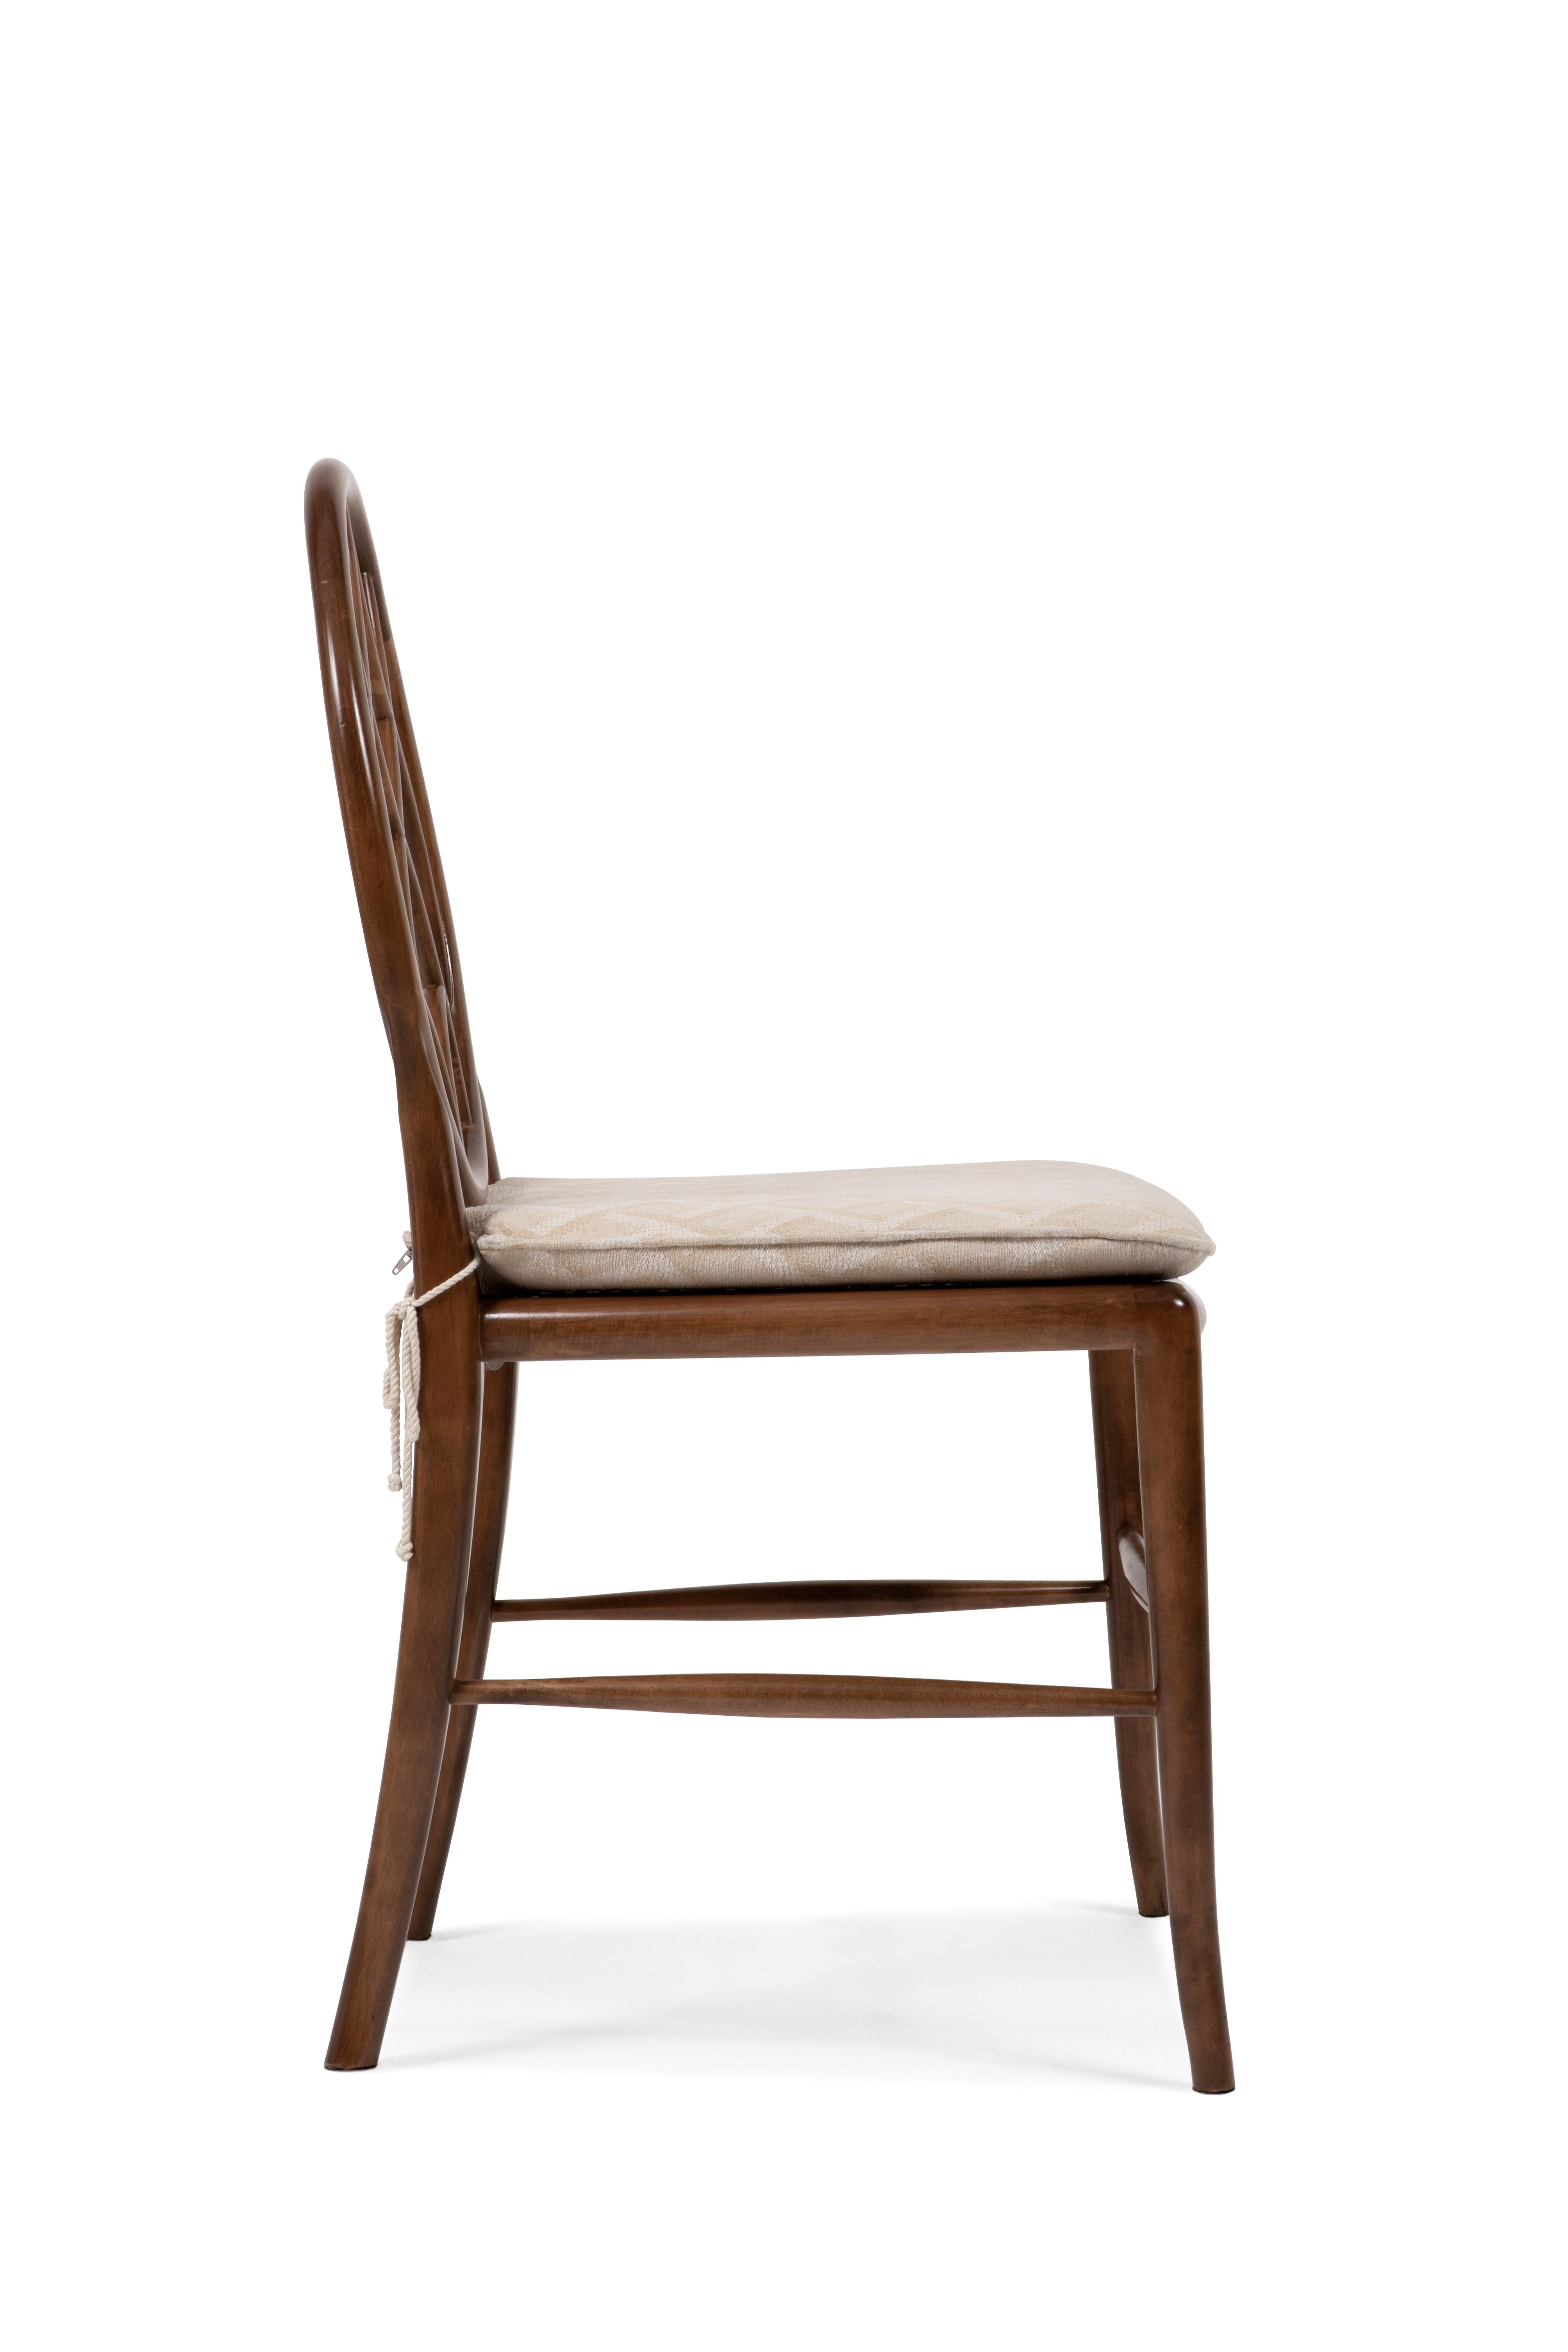 fancy wooden chairs